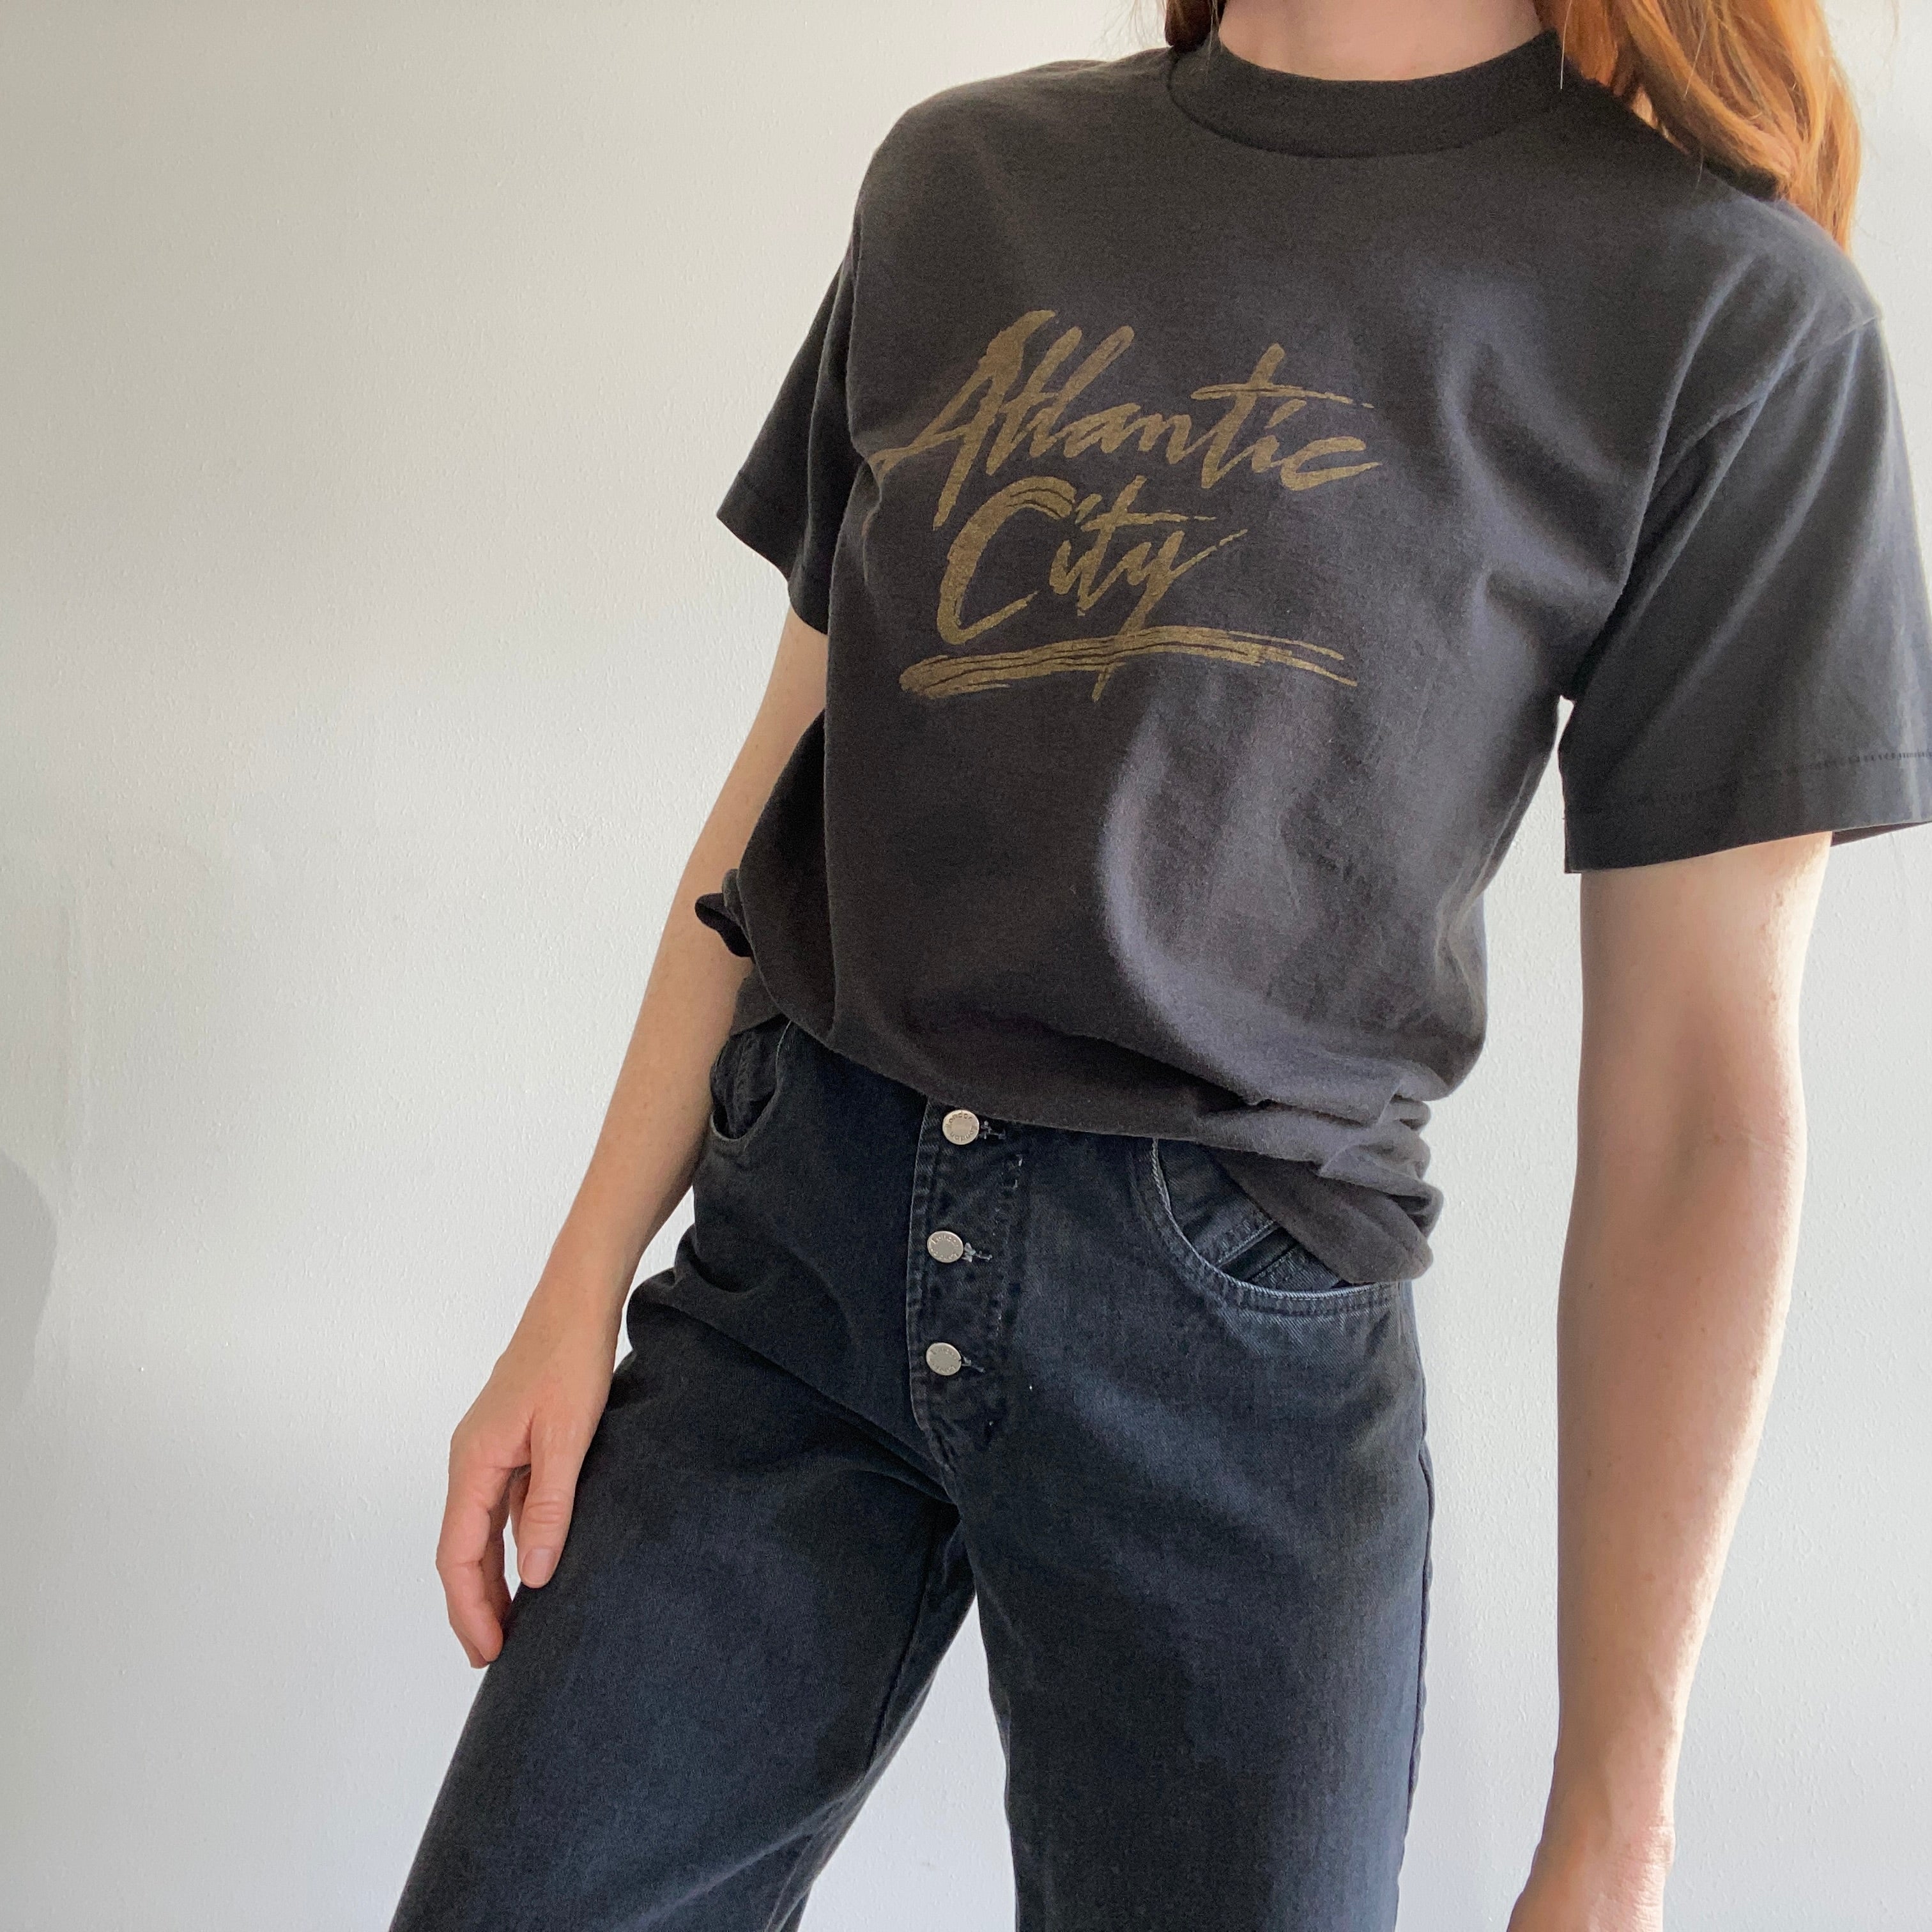 1980s Atlantic City Faded Tourist T-Shirt